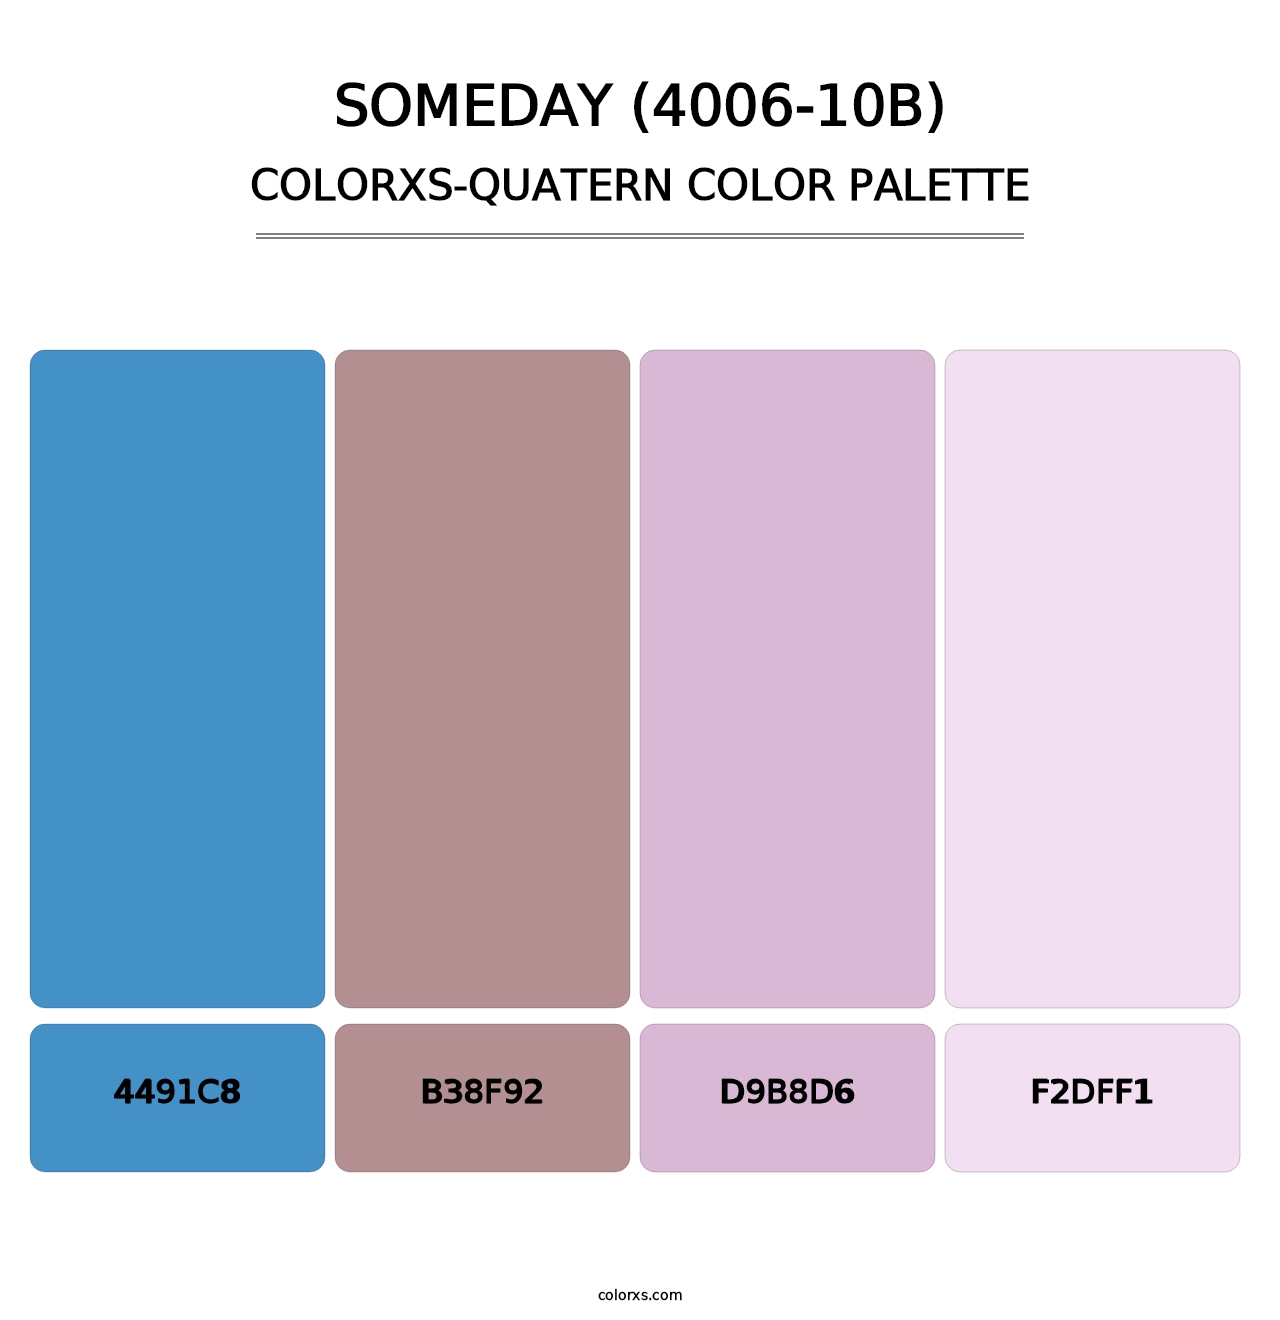 Someday (4006-10B) - Colorxs Quatern Palette